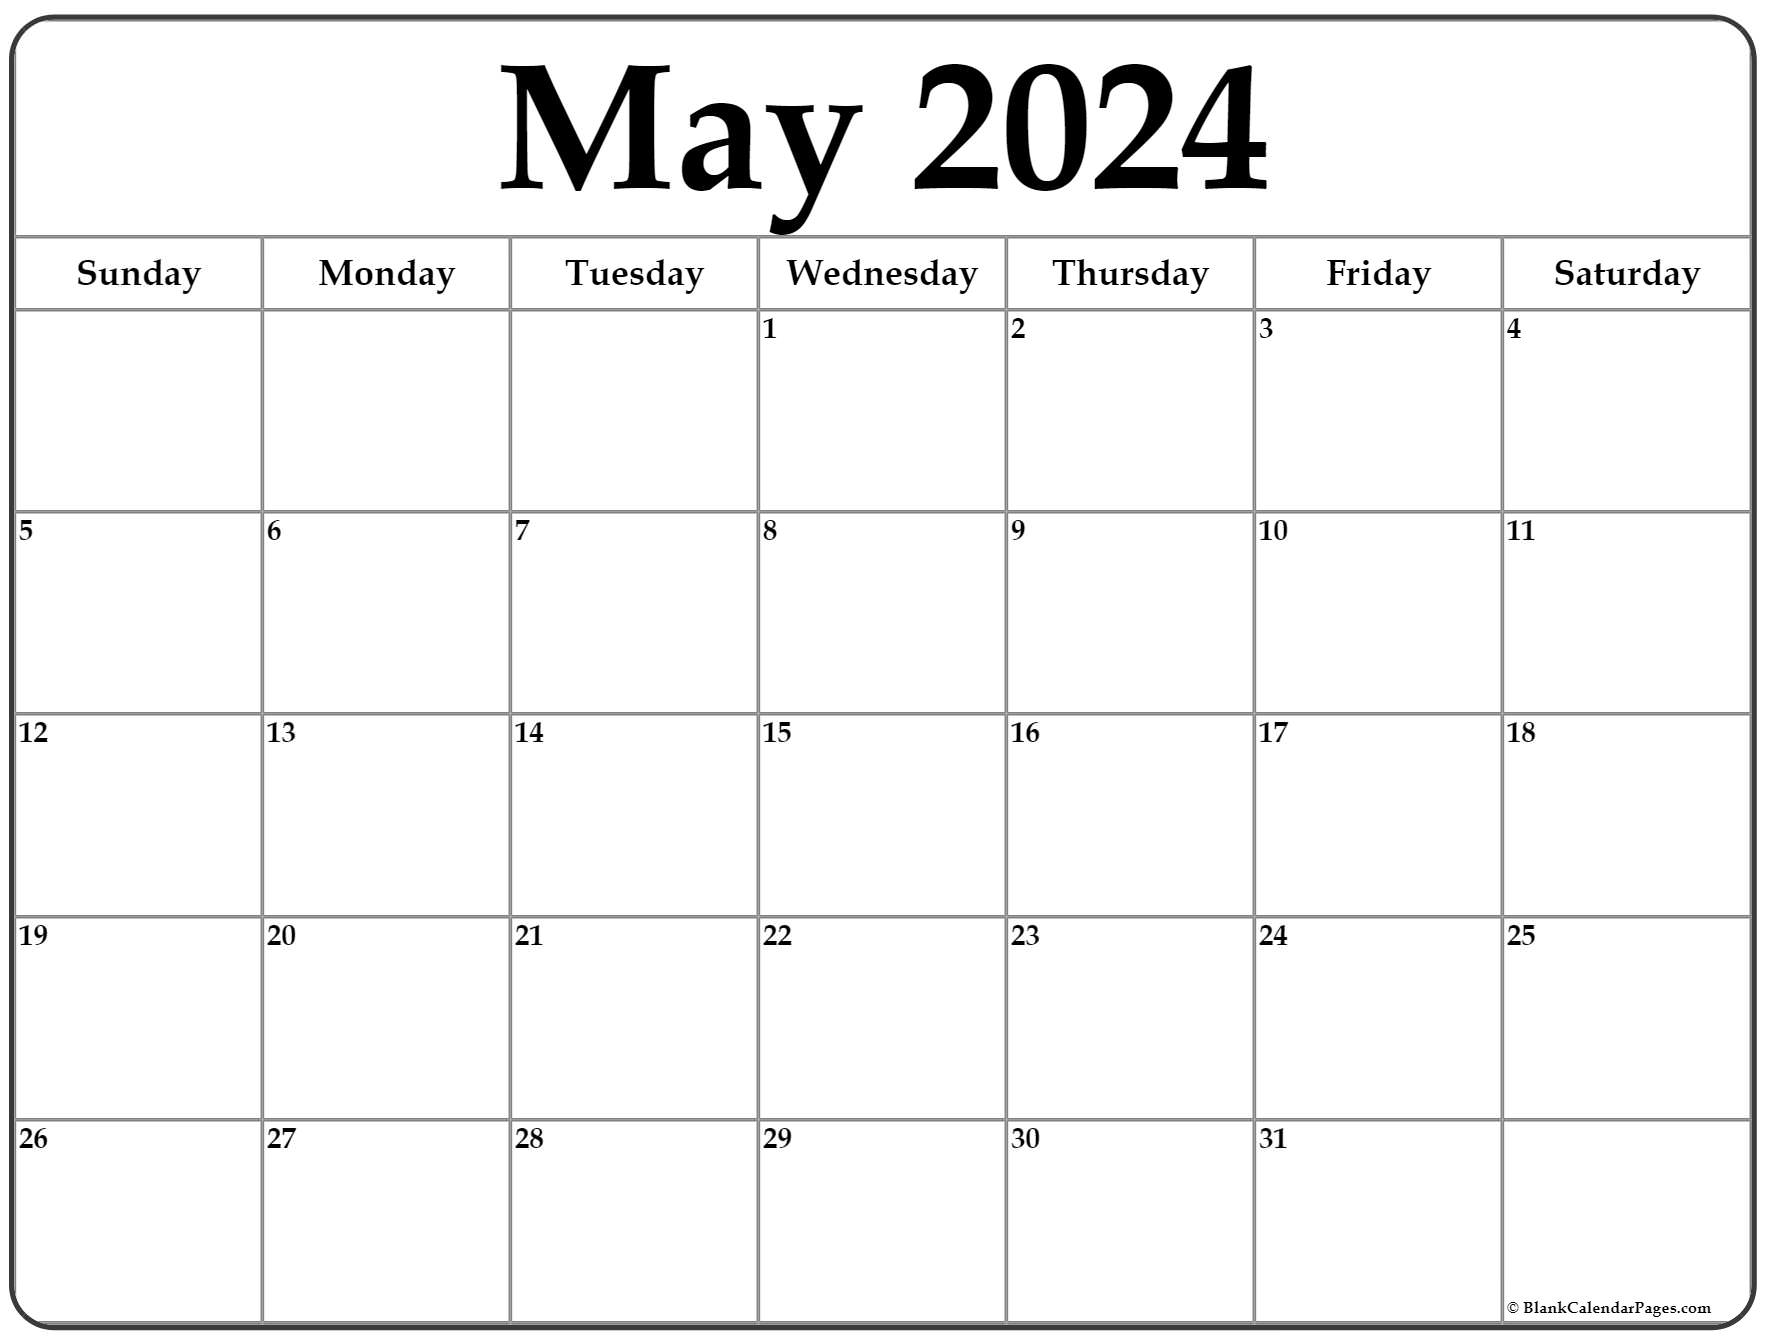 May 2022 Blank Calendar Printable May 2022 Calendar | Free Printable Calendar Templates